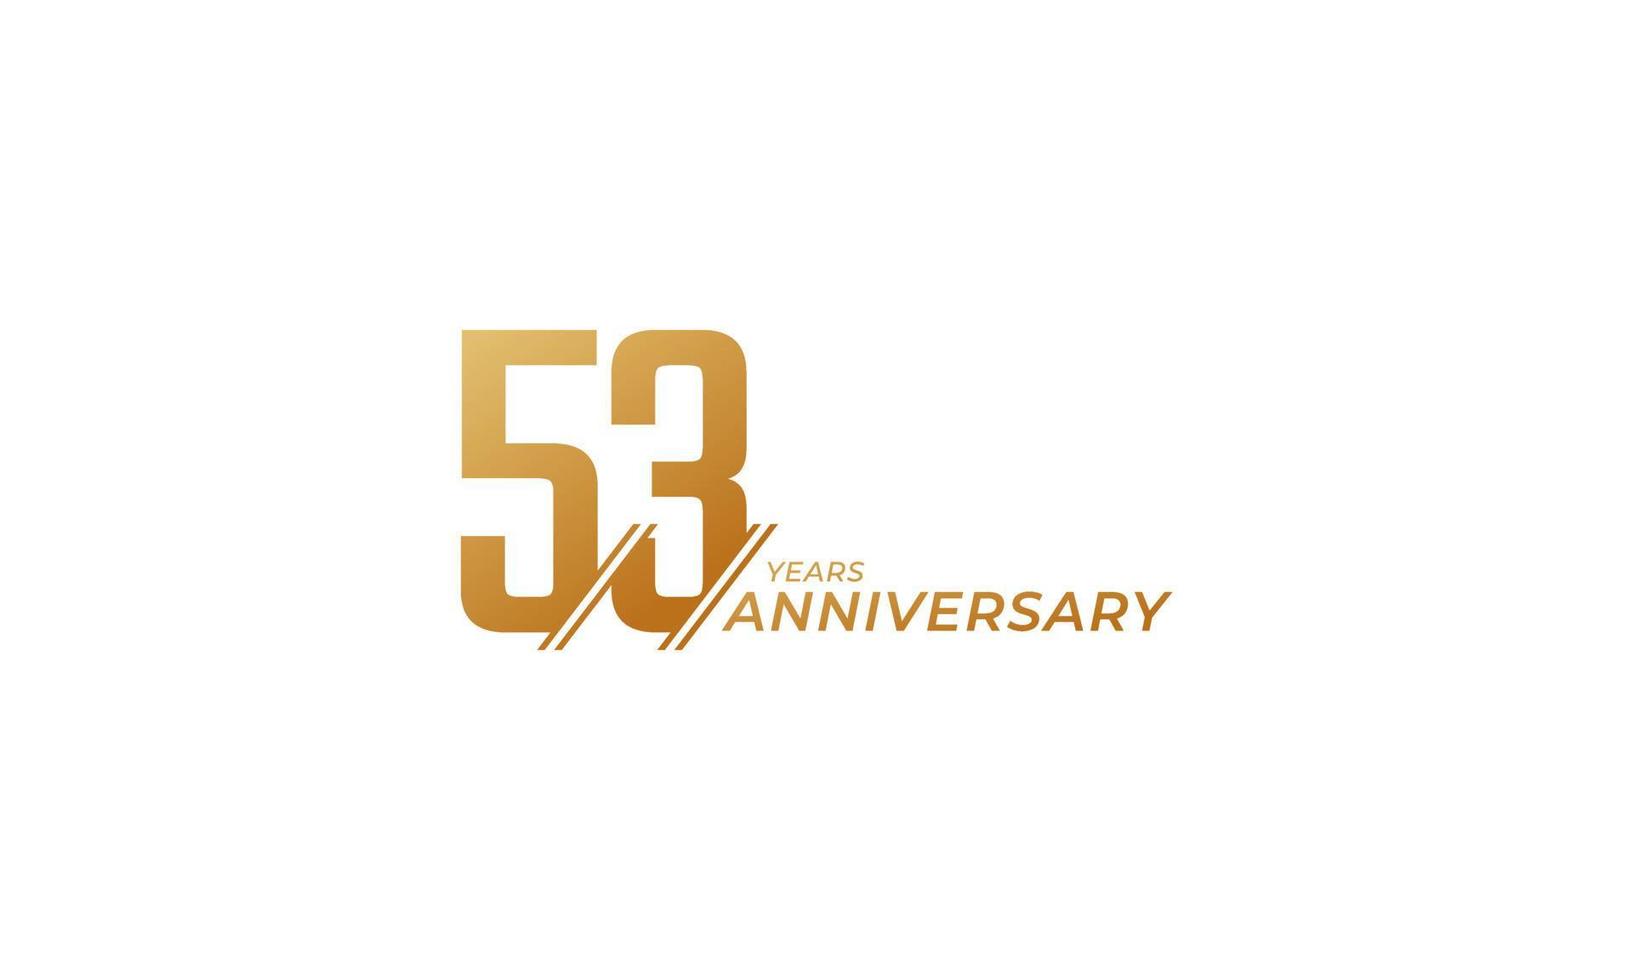 53 Year Anniversary Celebration Vector. Happy Anniversary Greeting Celebrates Template Design Illustration vector